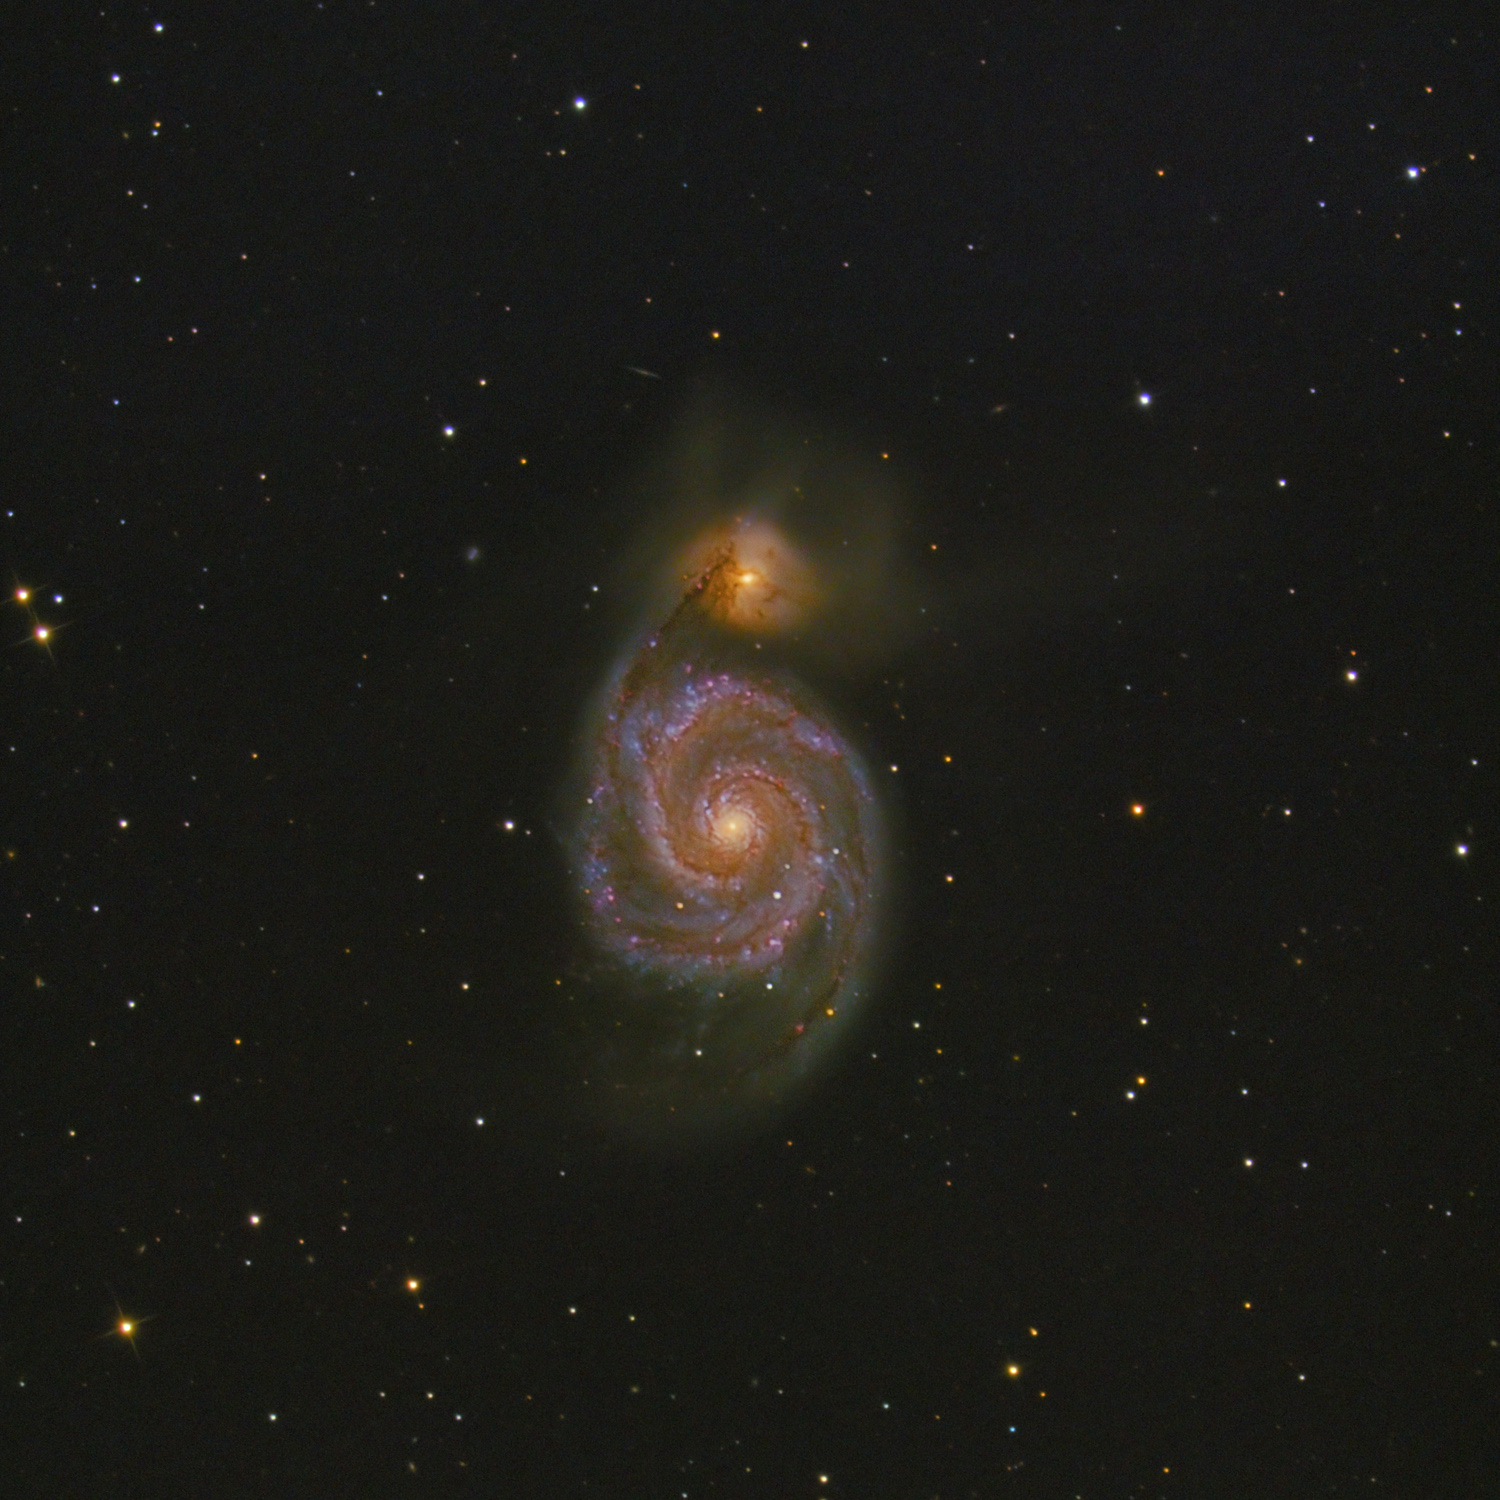 M51 - Whirlpoolgalaxie M 51